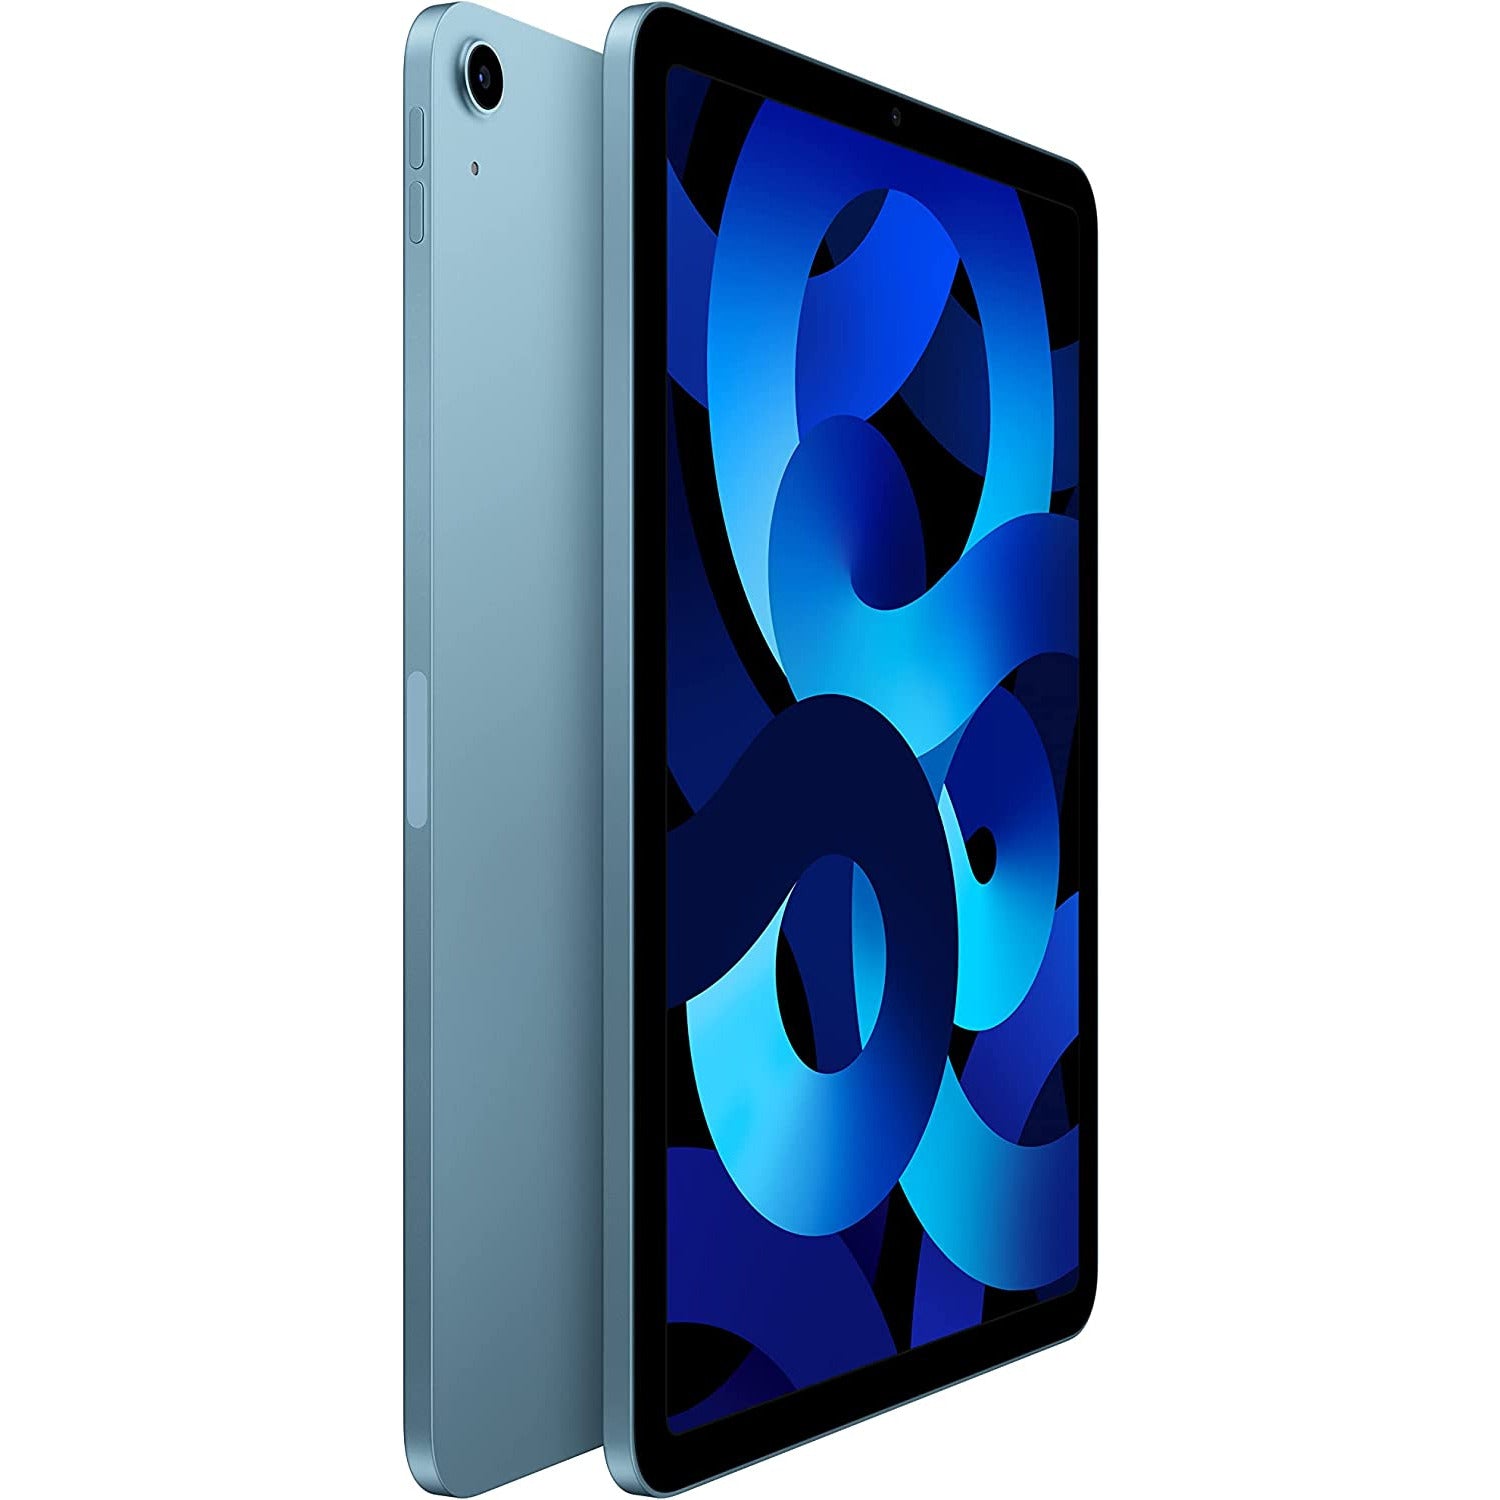 iPad Air 3 - 10.5-inch 64GB Wi-Fi + Cellular (Space Gray)